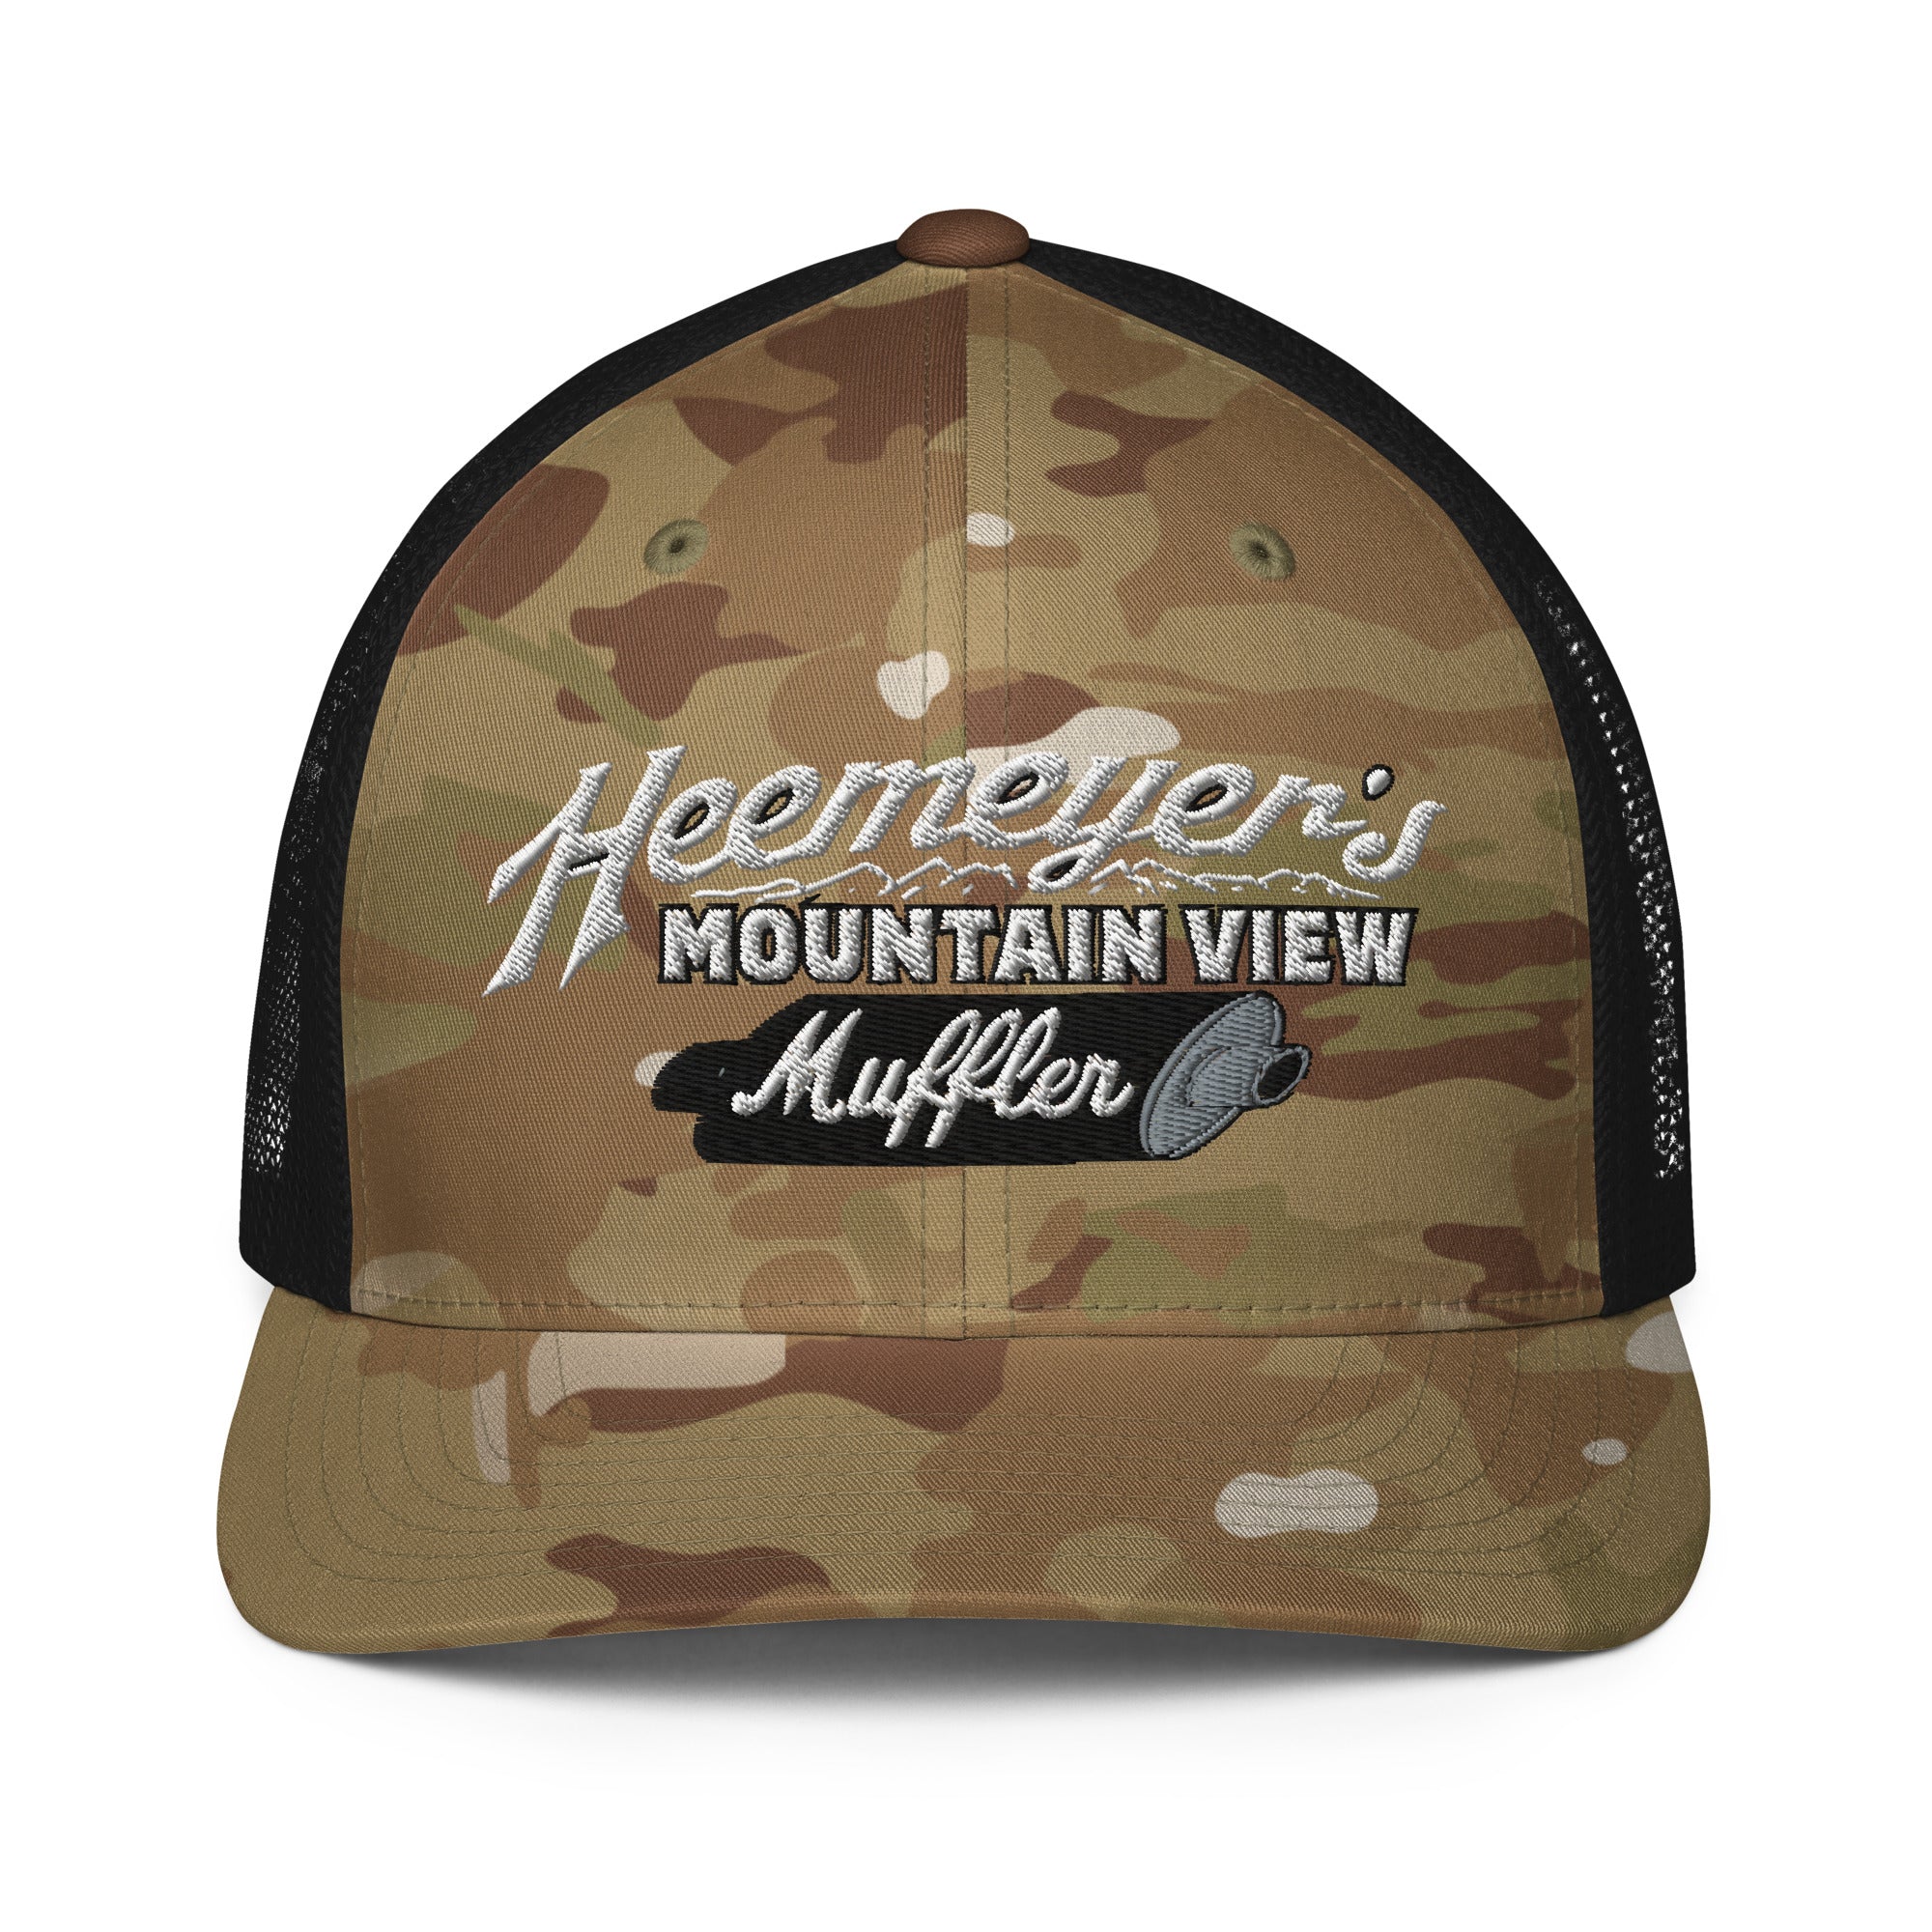 Heemeyer's Mountain View Muffler Flexfit Permacurve Trucker Cap